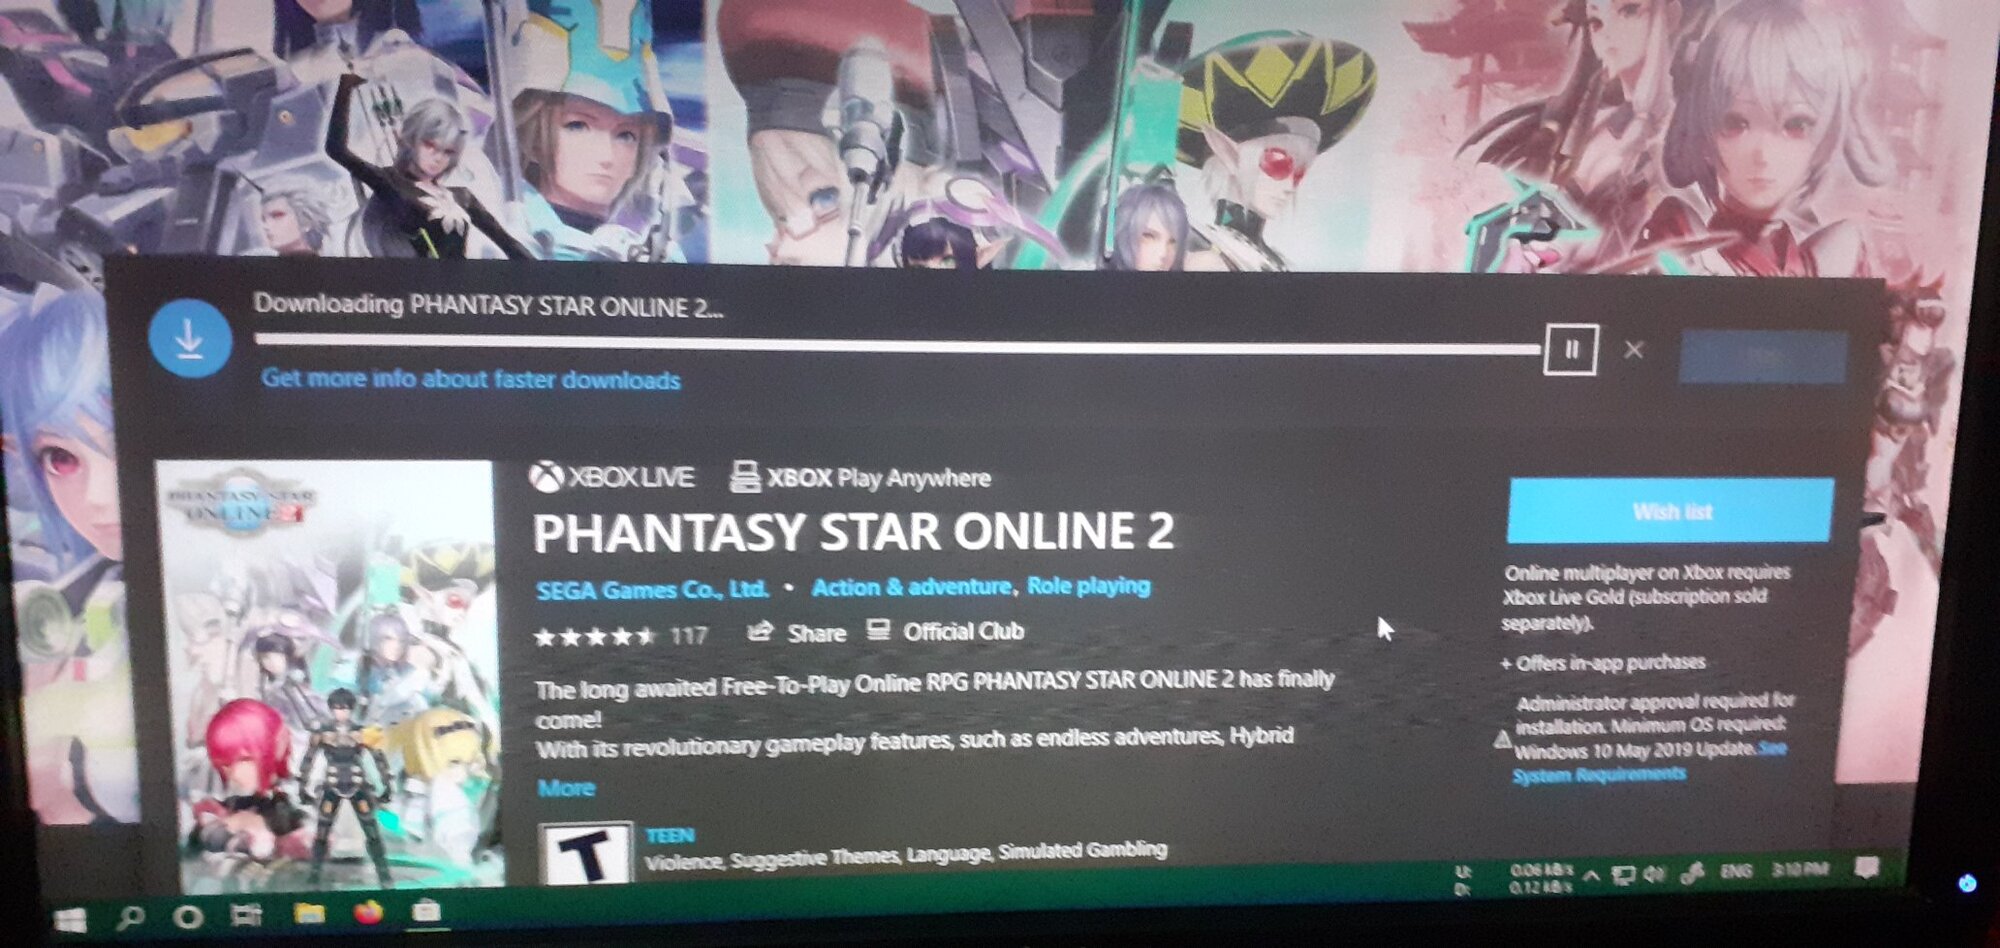 Microsoft Store, stuck on "Downloading Phantasy Star Online 2..." 5fc253a3-02d3-4ea7-9300-cc651d1a8520?upload=true.jpg